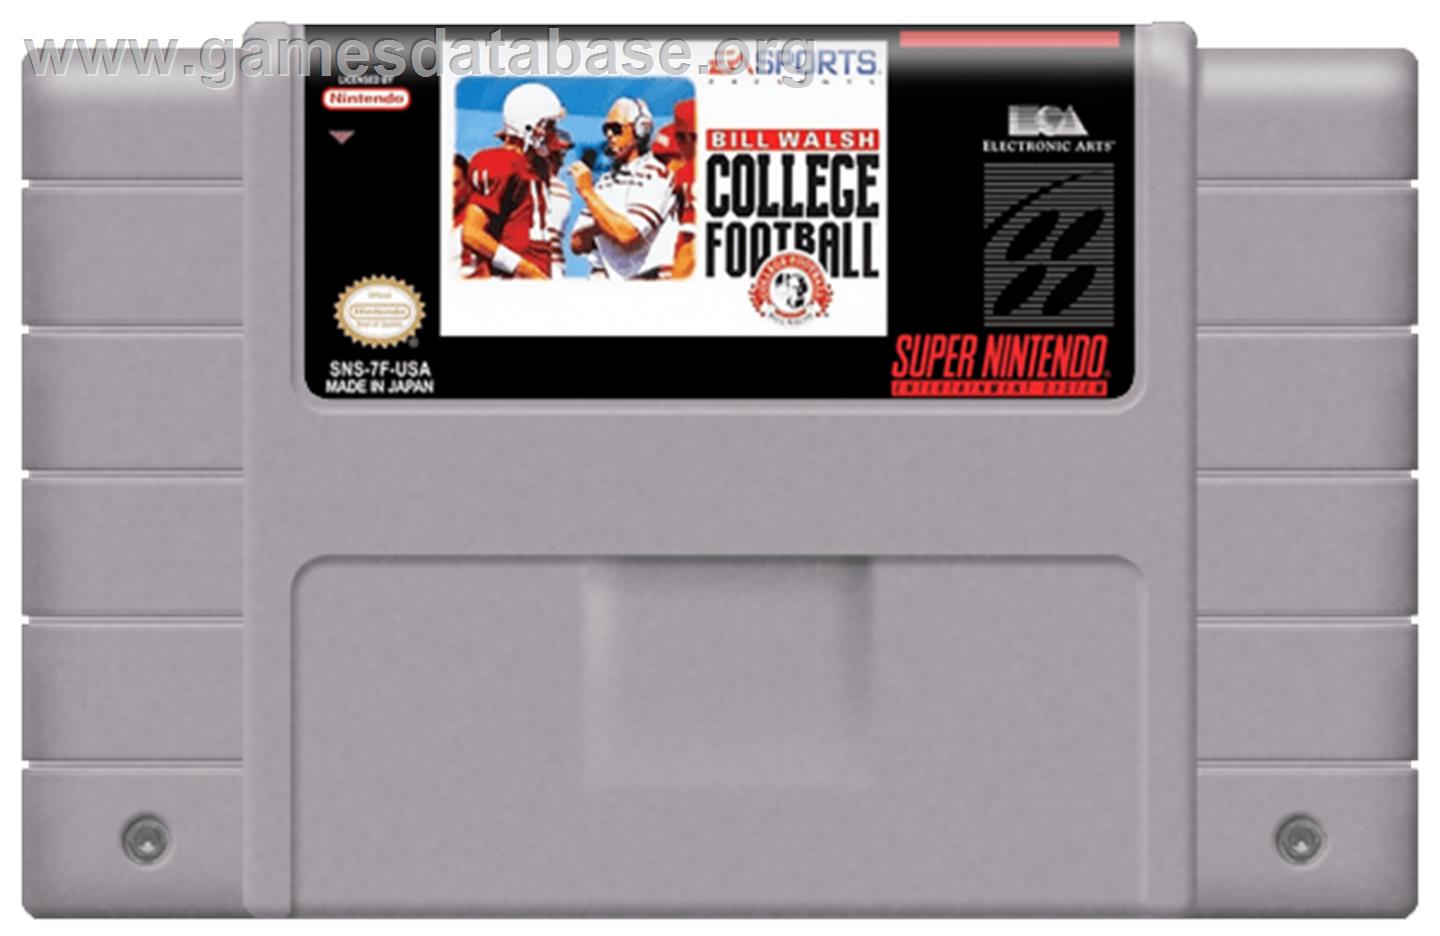 Bill Walsh College Football - Nintendo SNES - Artwork - Cartridge